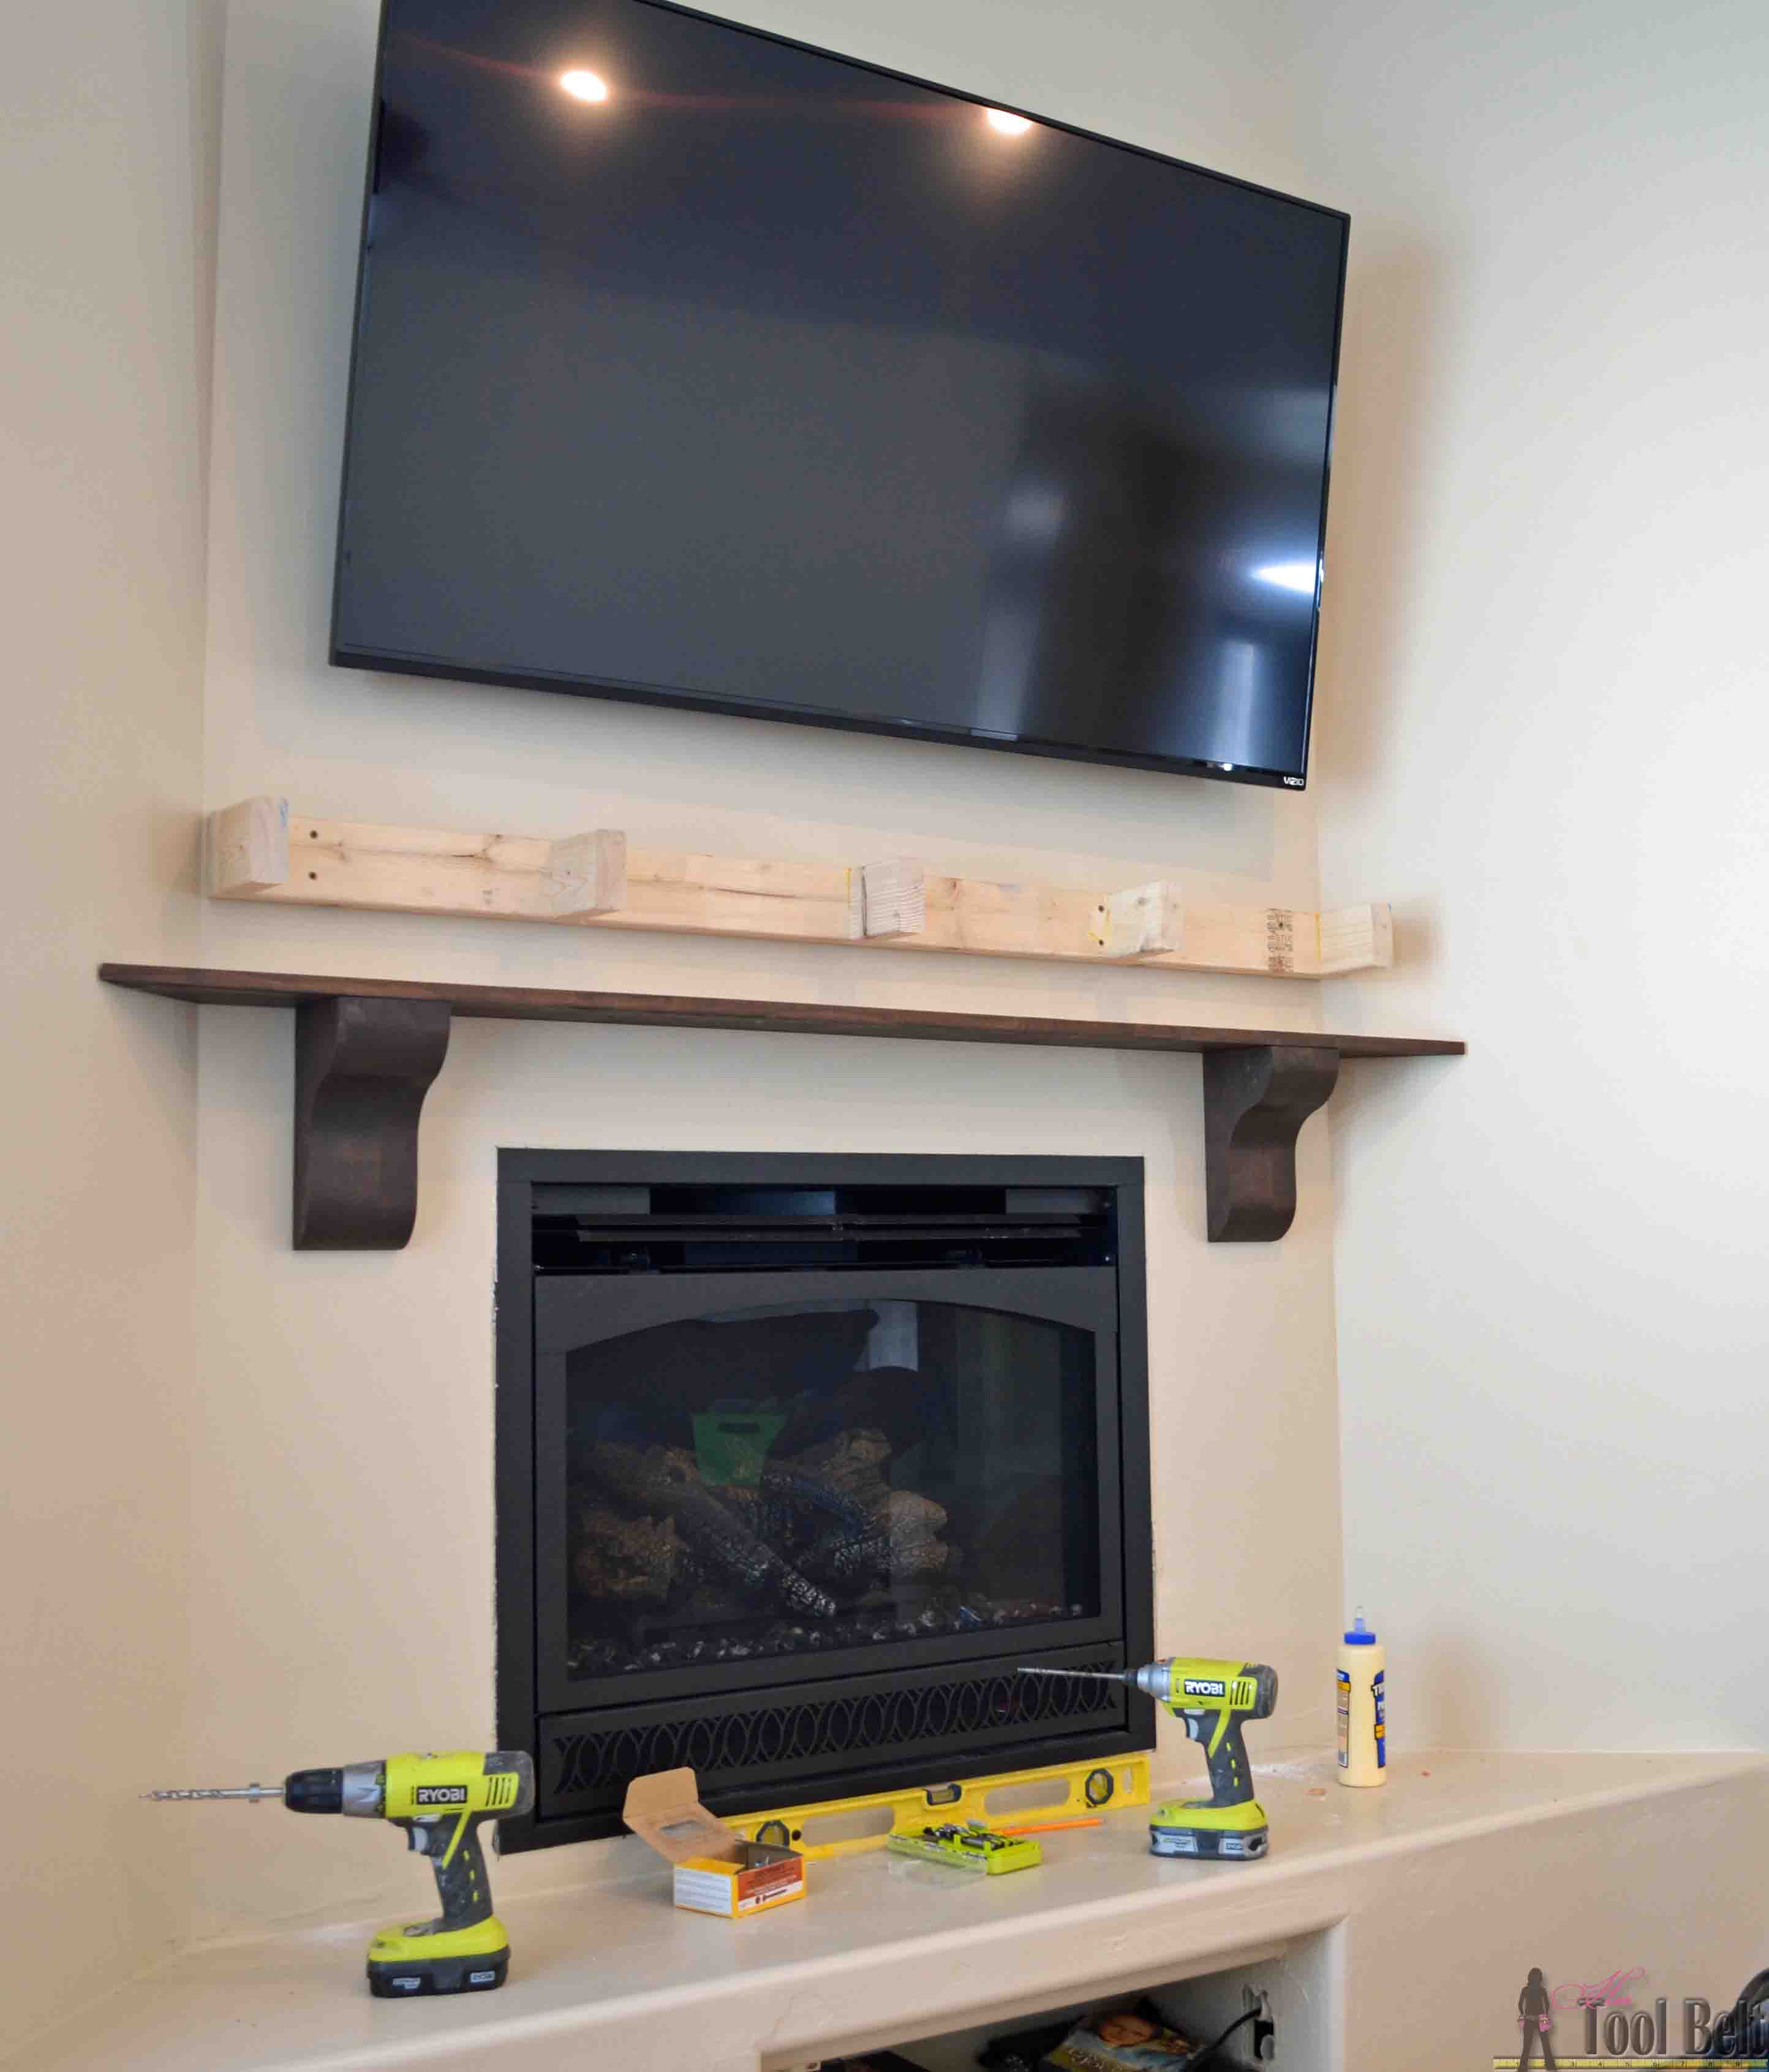 Best ideas about DIY Mantel Shelf
. Save or Pin DIY Fireplace Mantel Shelf Her Tool Belt Now.